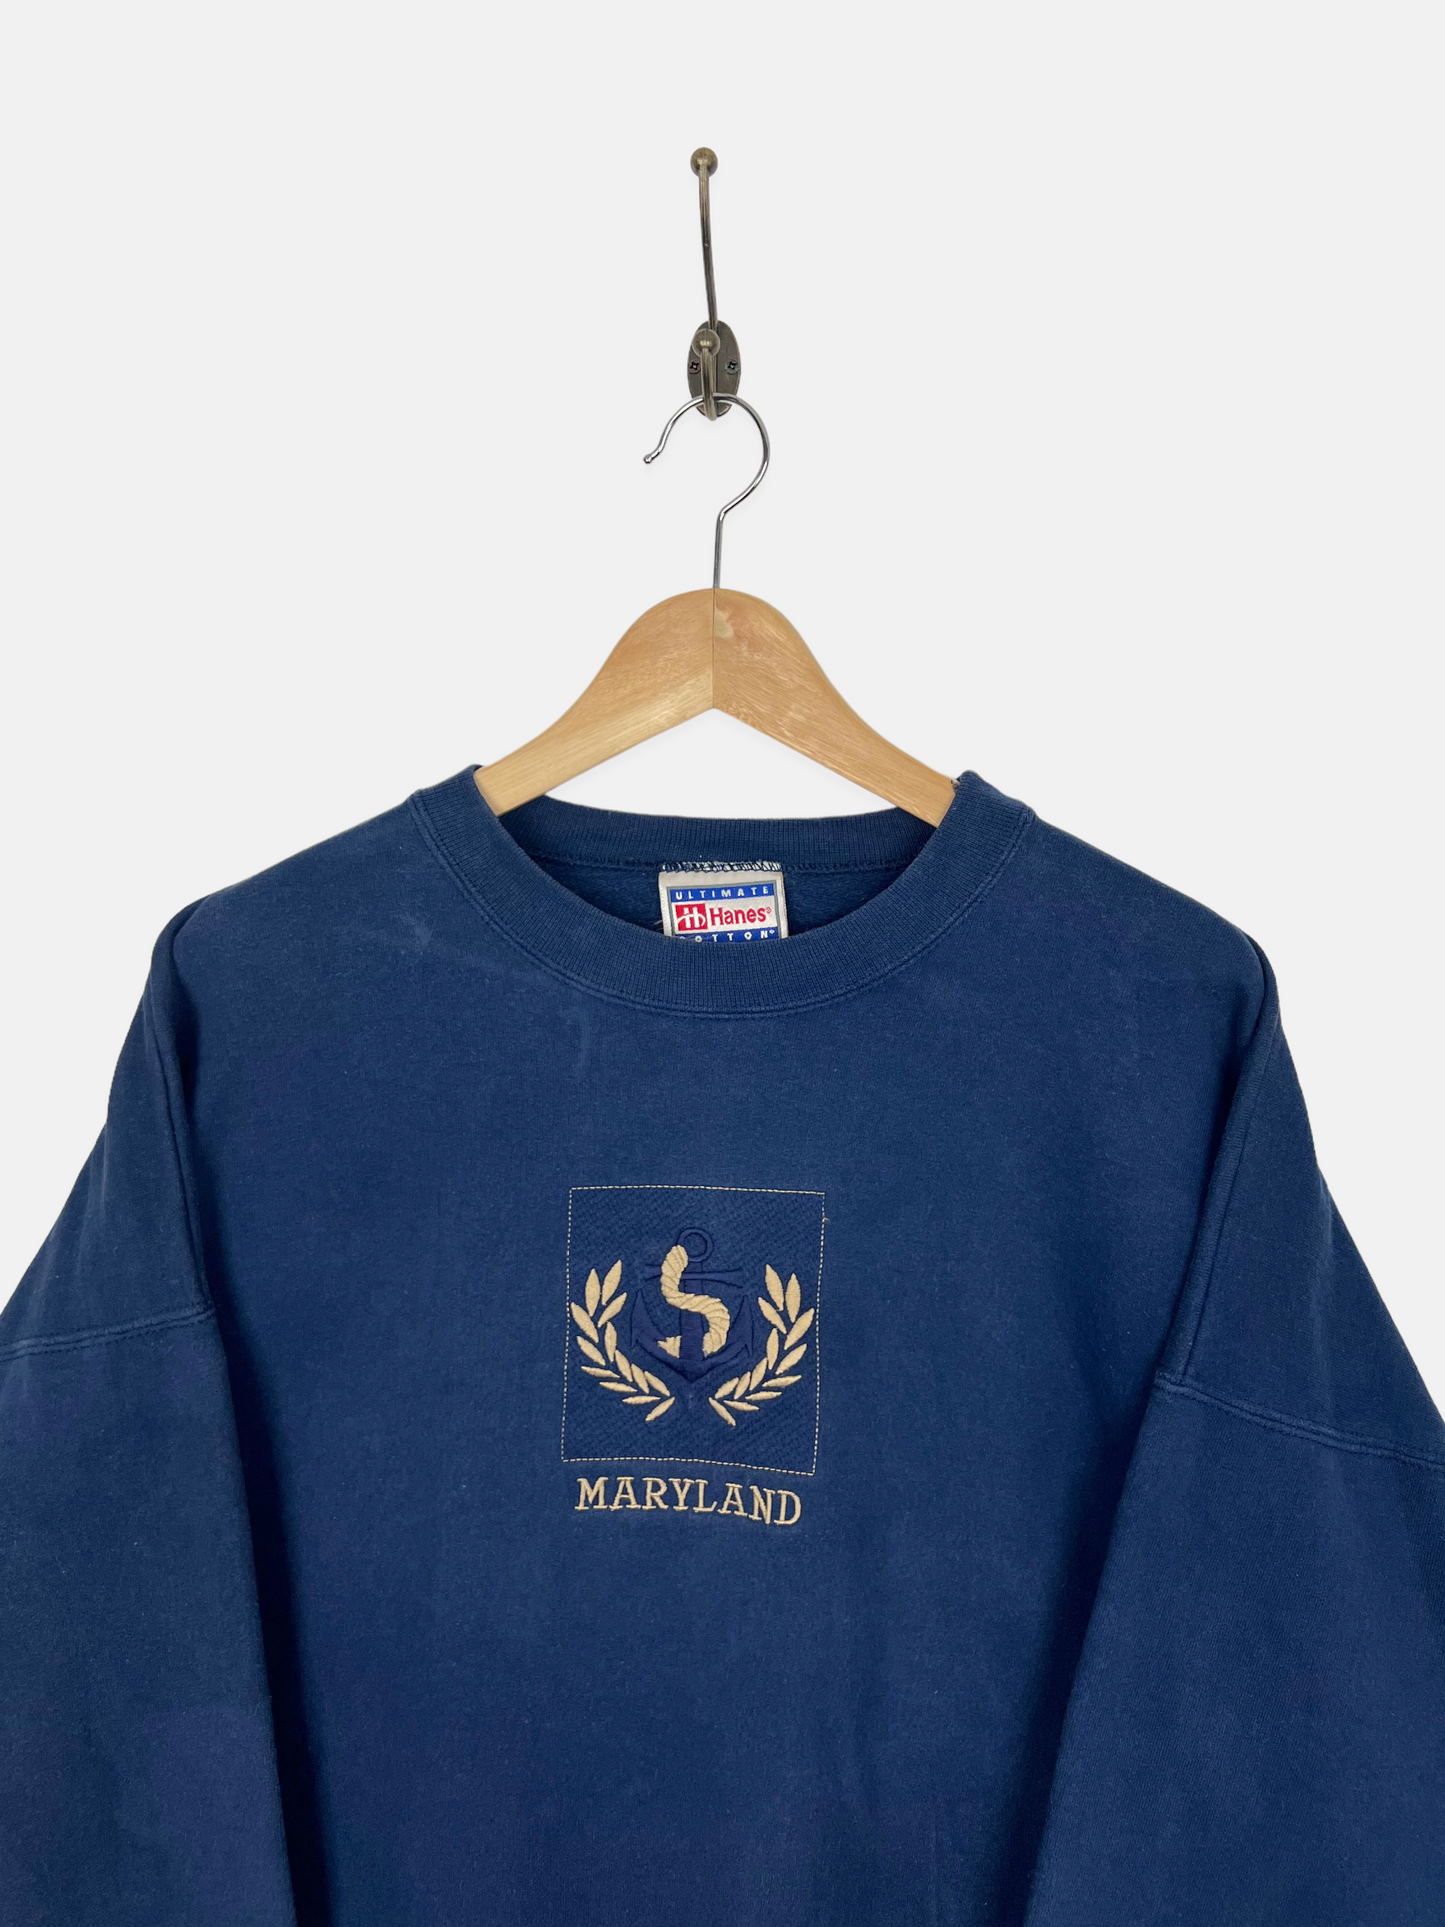 90's Maryland Embroidered Vintage Sweatshirt Size M-L